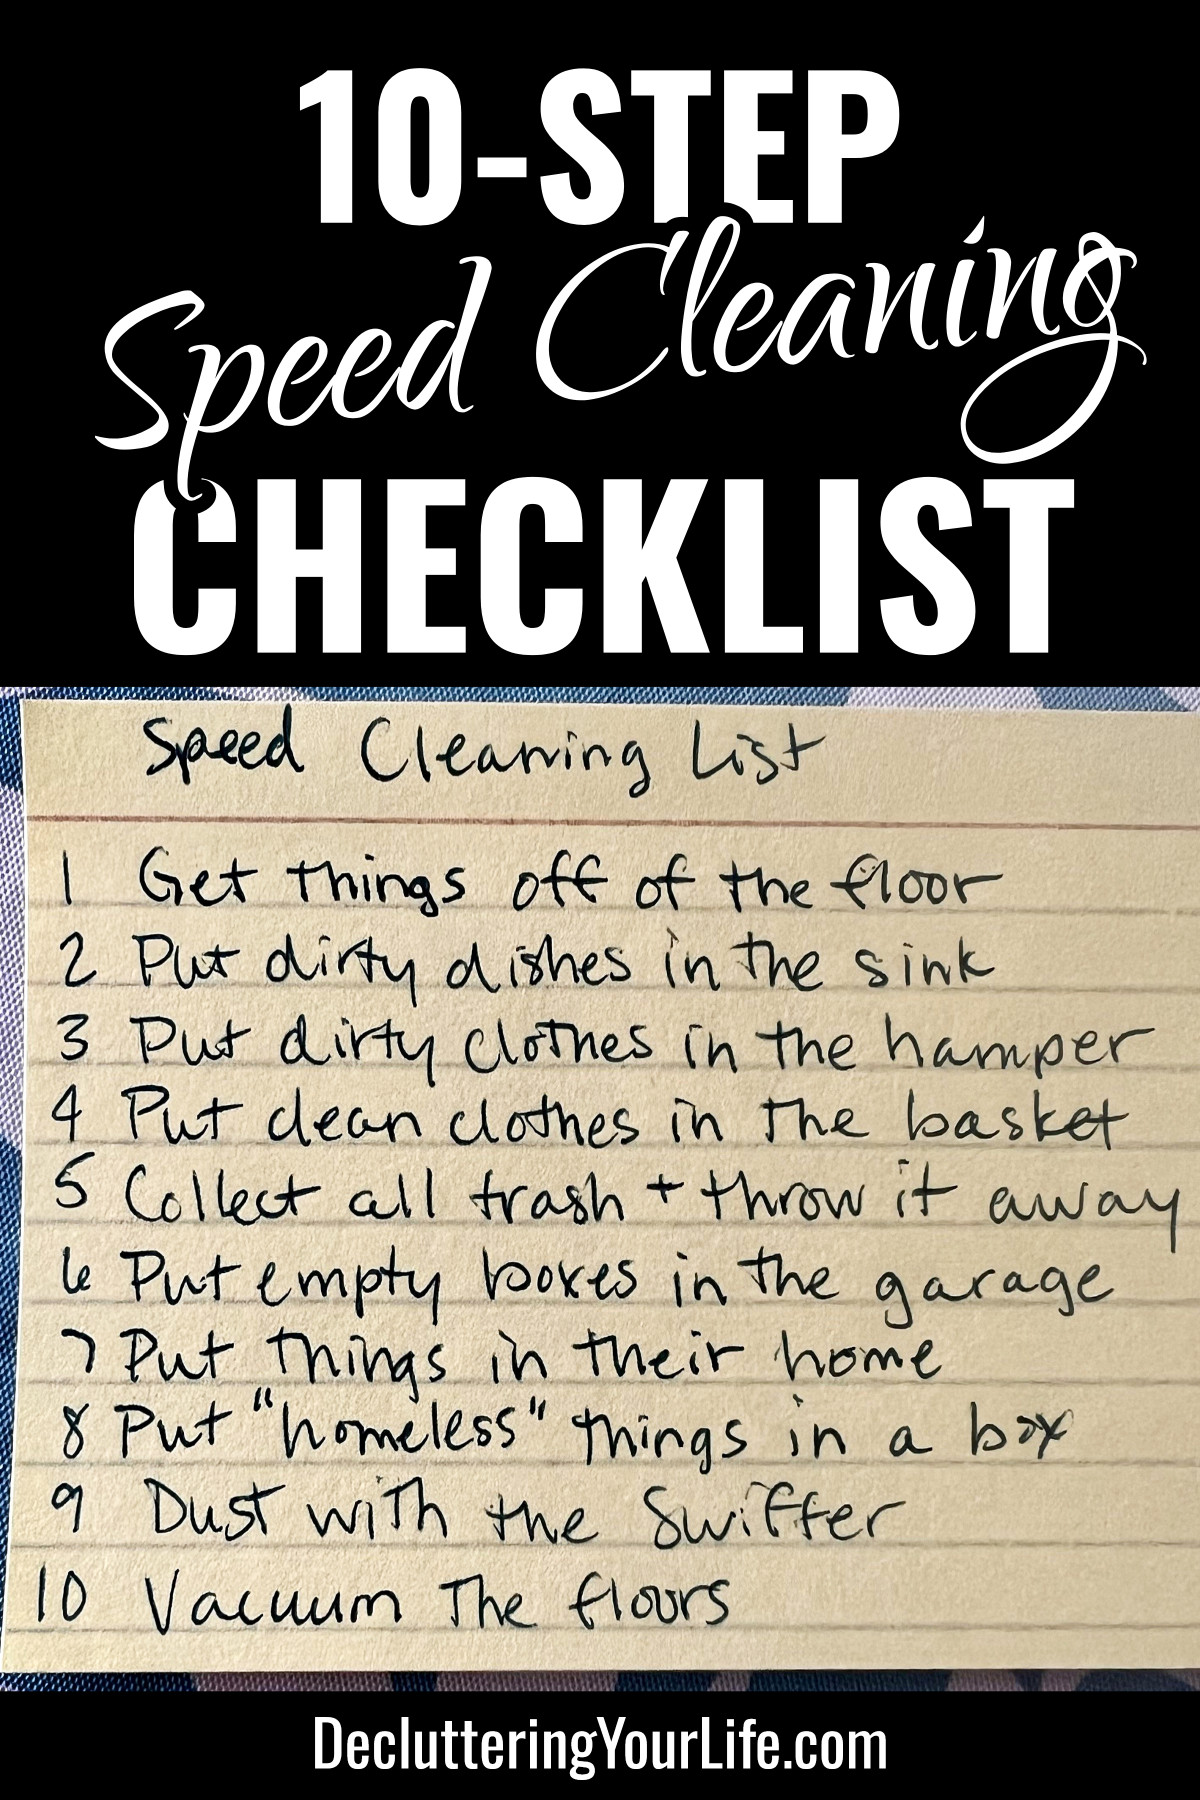 speed cleaning checklist